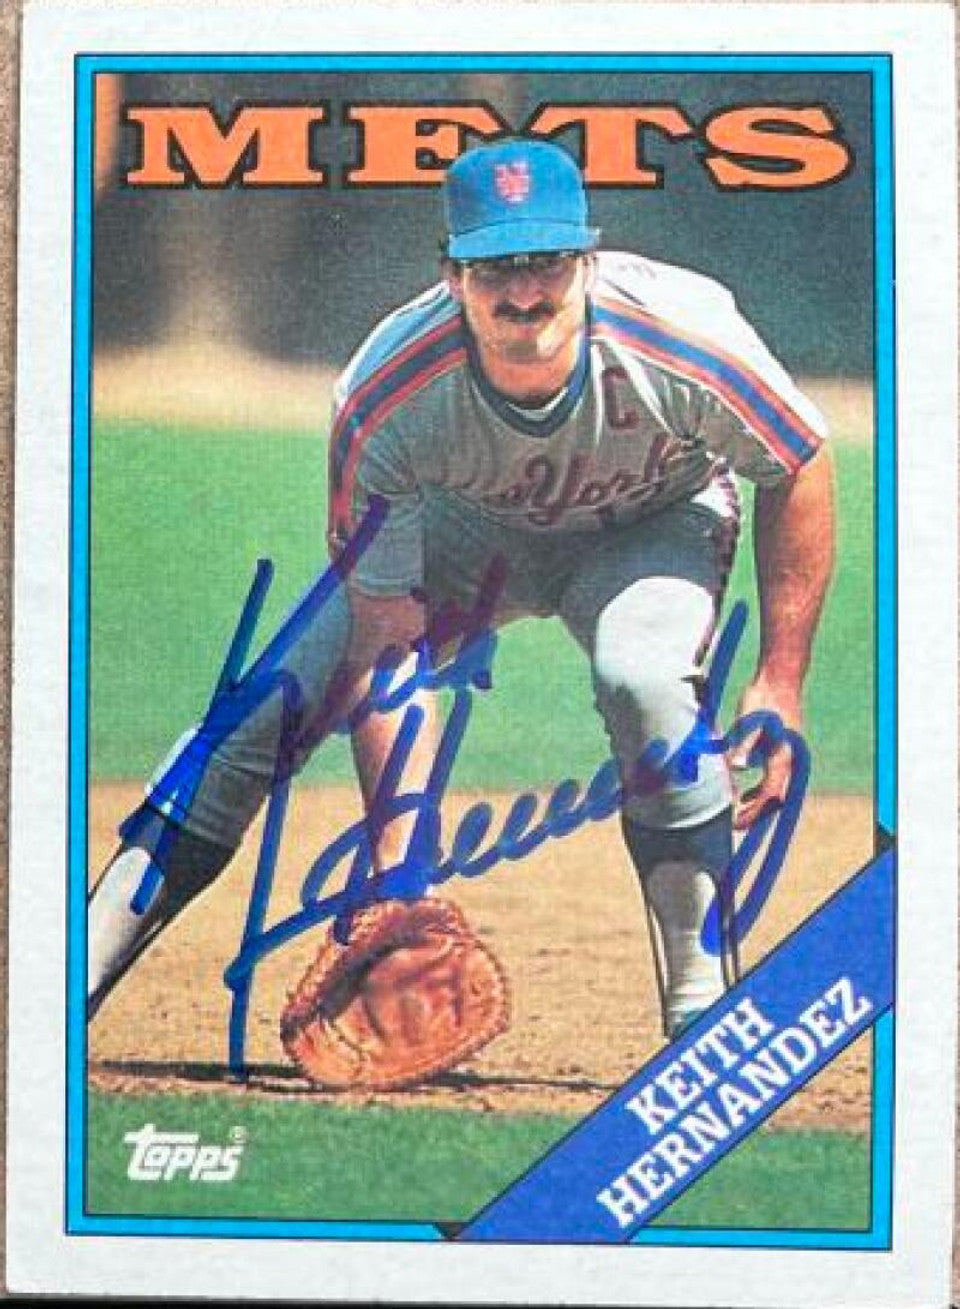 Keith Hernandez Signed 1988 Topps Baseball Card - New York Mets